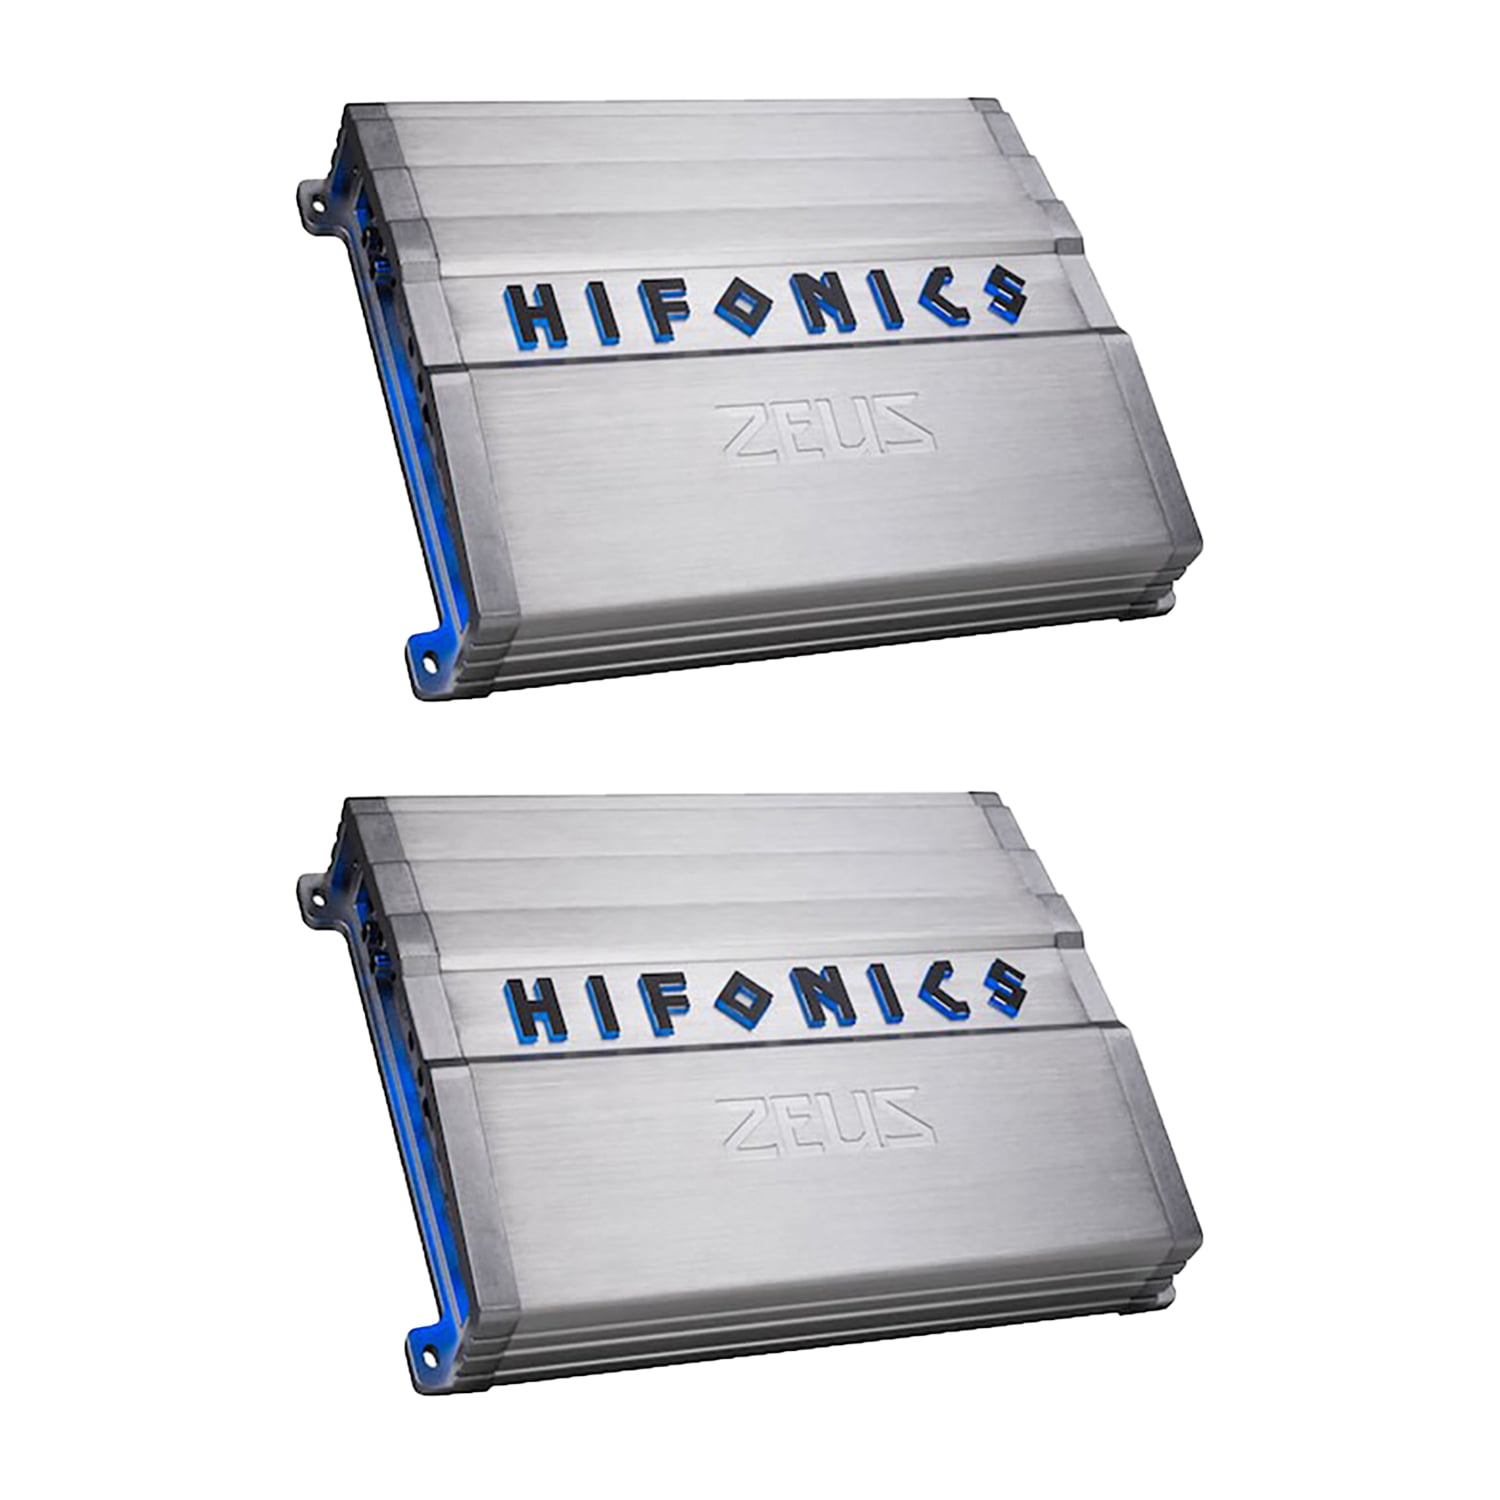 Hifonics ZG-1200.4 1200W Max Class A/B 4 Channel Car Audio Amplifier (2  Pack)